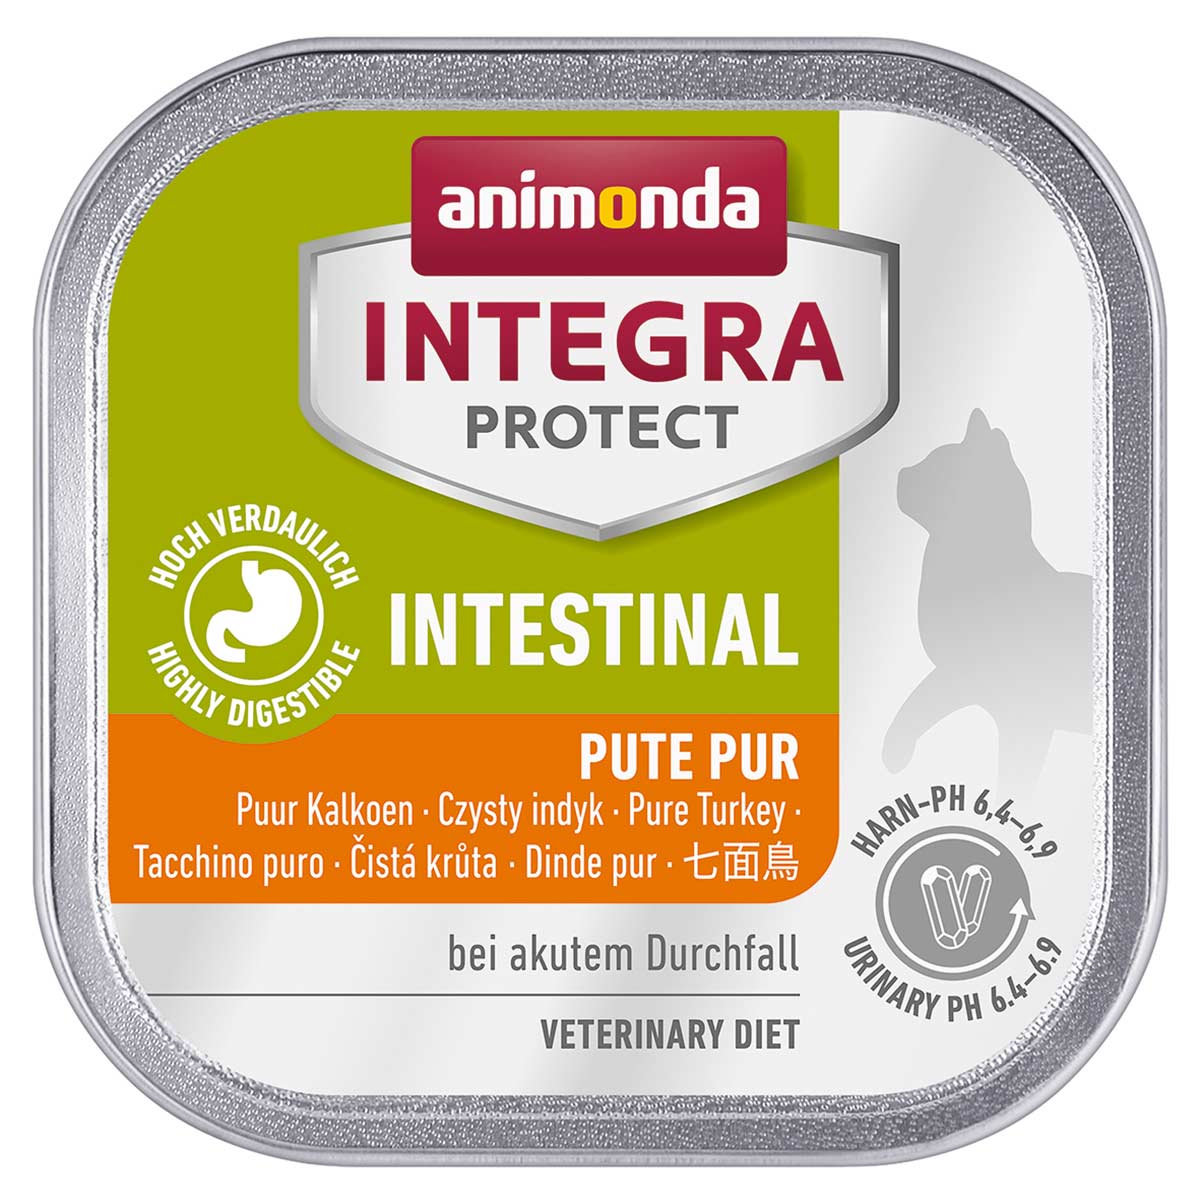 animonda INTEGRA PROTECT Intestinal Pute pur 32x100g